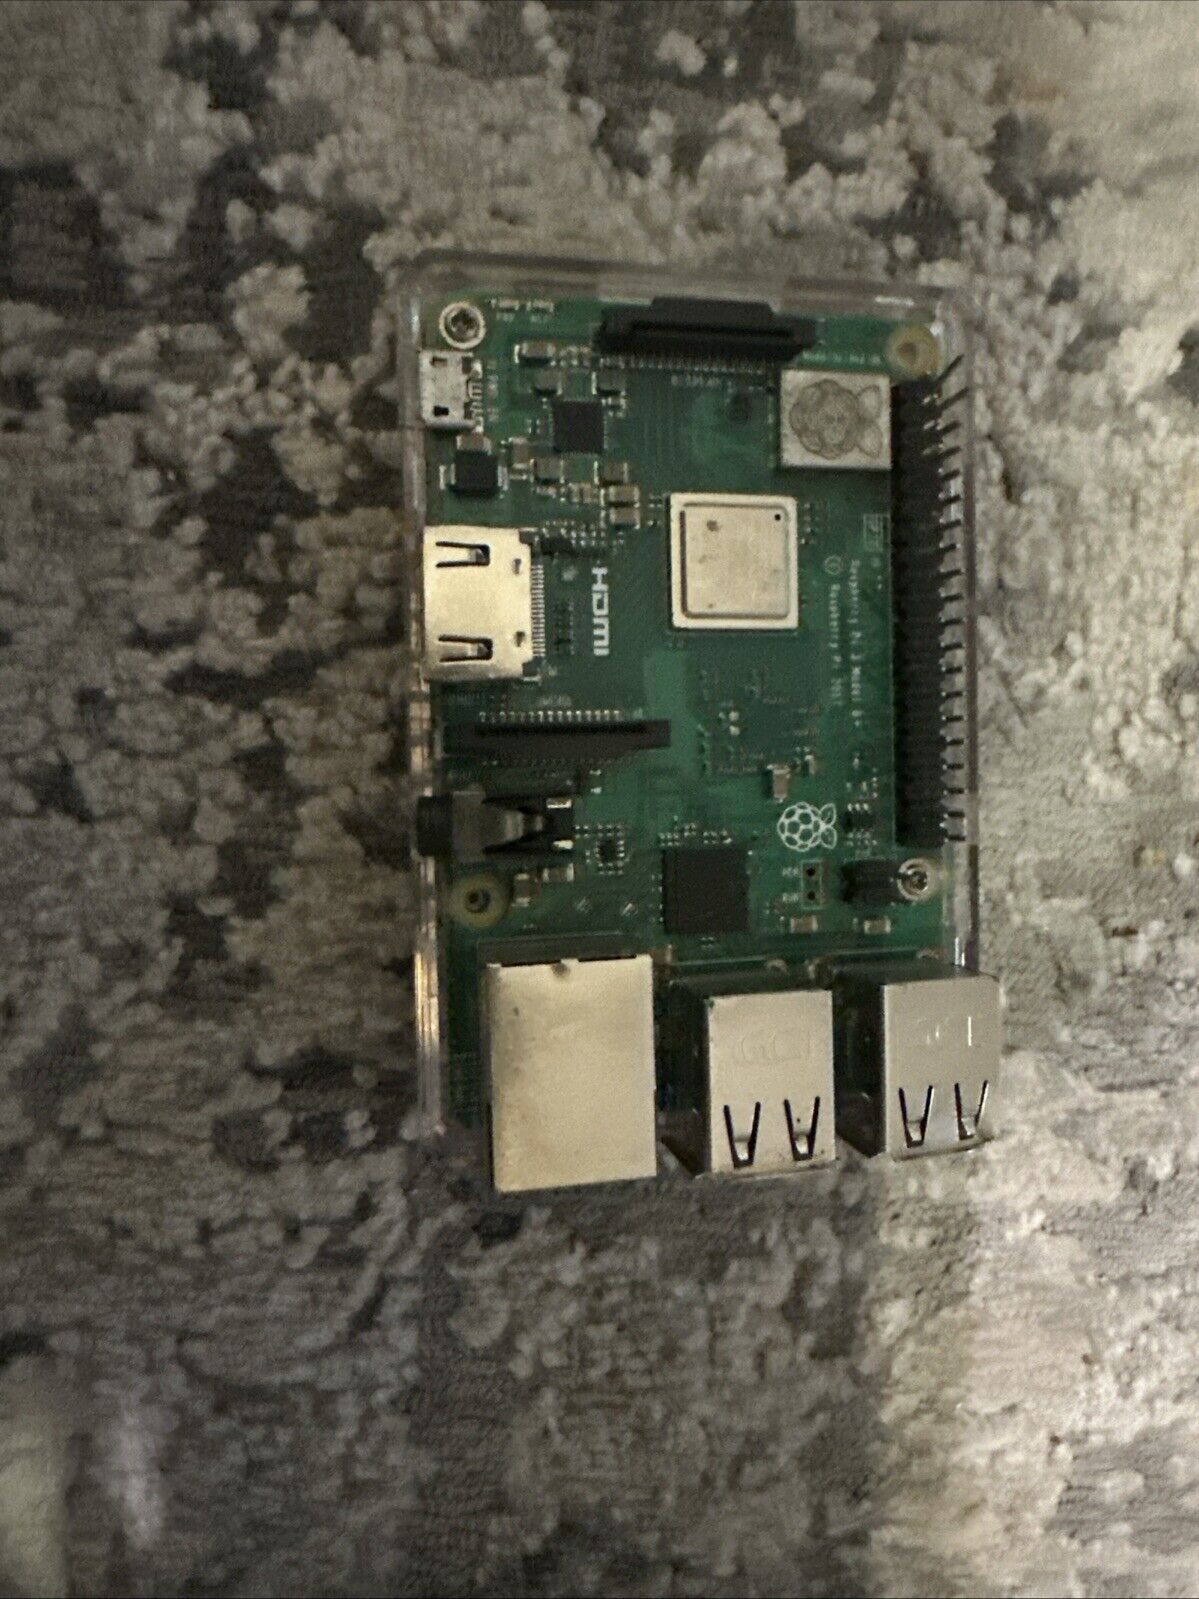 Raspberry Pi 3 Model B+ (Broadcom BCM2837, 1.2 GHz, 1 GB RAM) Single-Board...